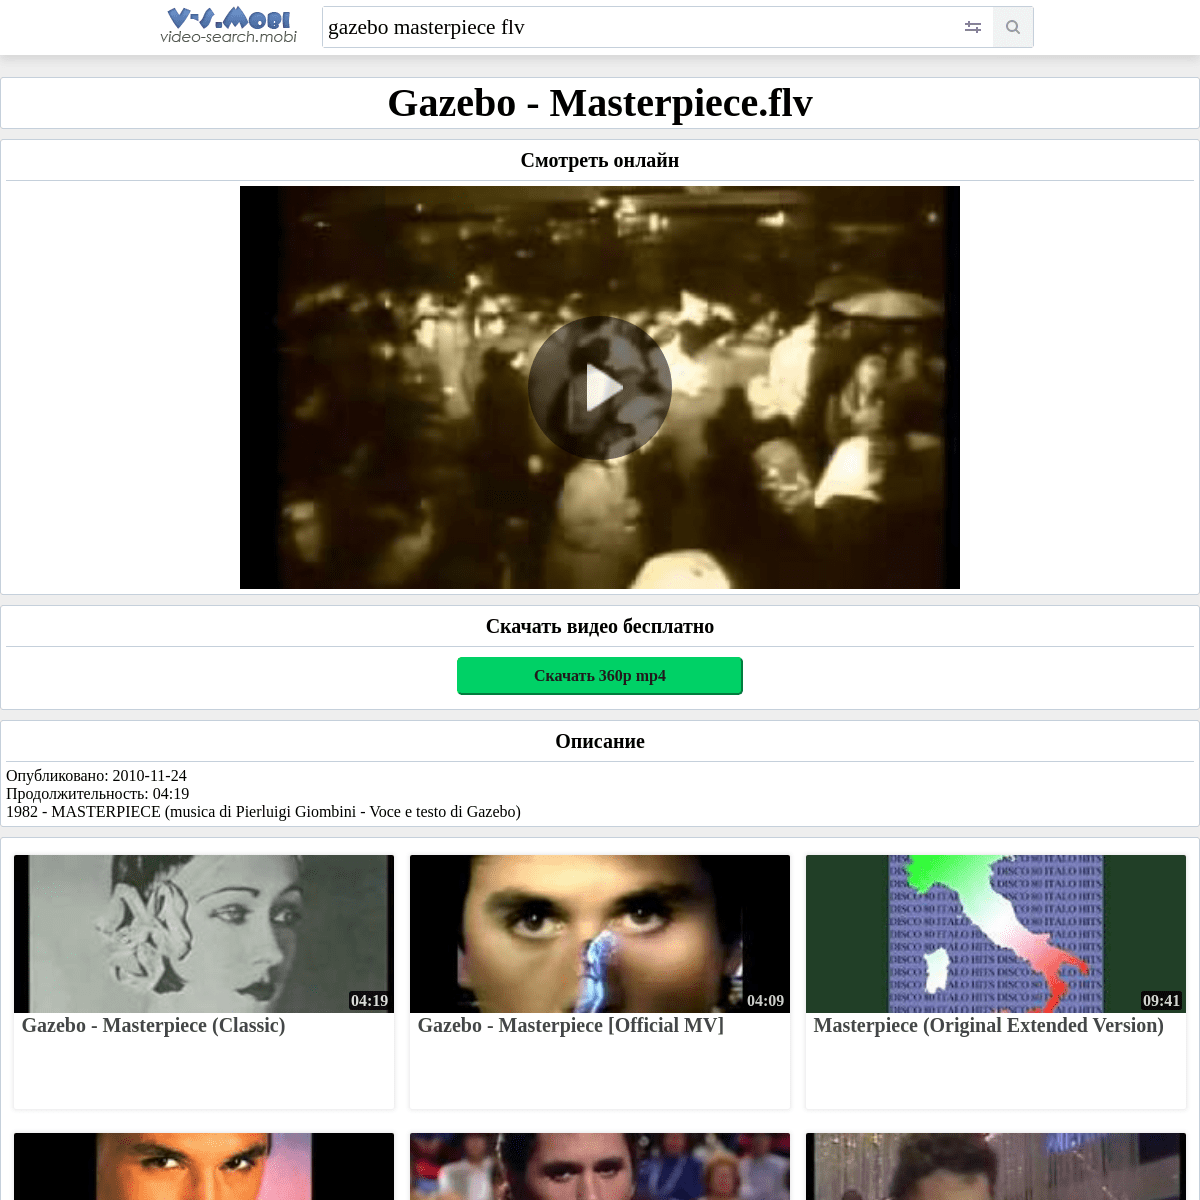 A complete backup of https://v-s.mobi/gazebo-masterpiece-flv-04:19